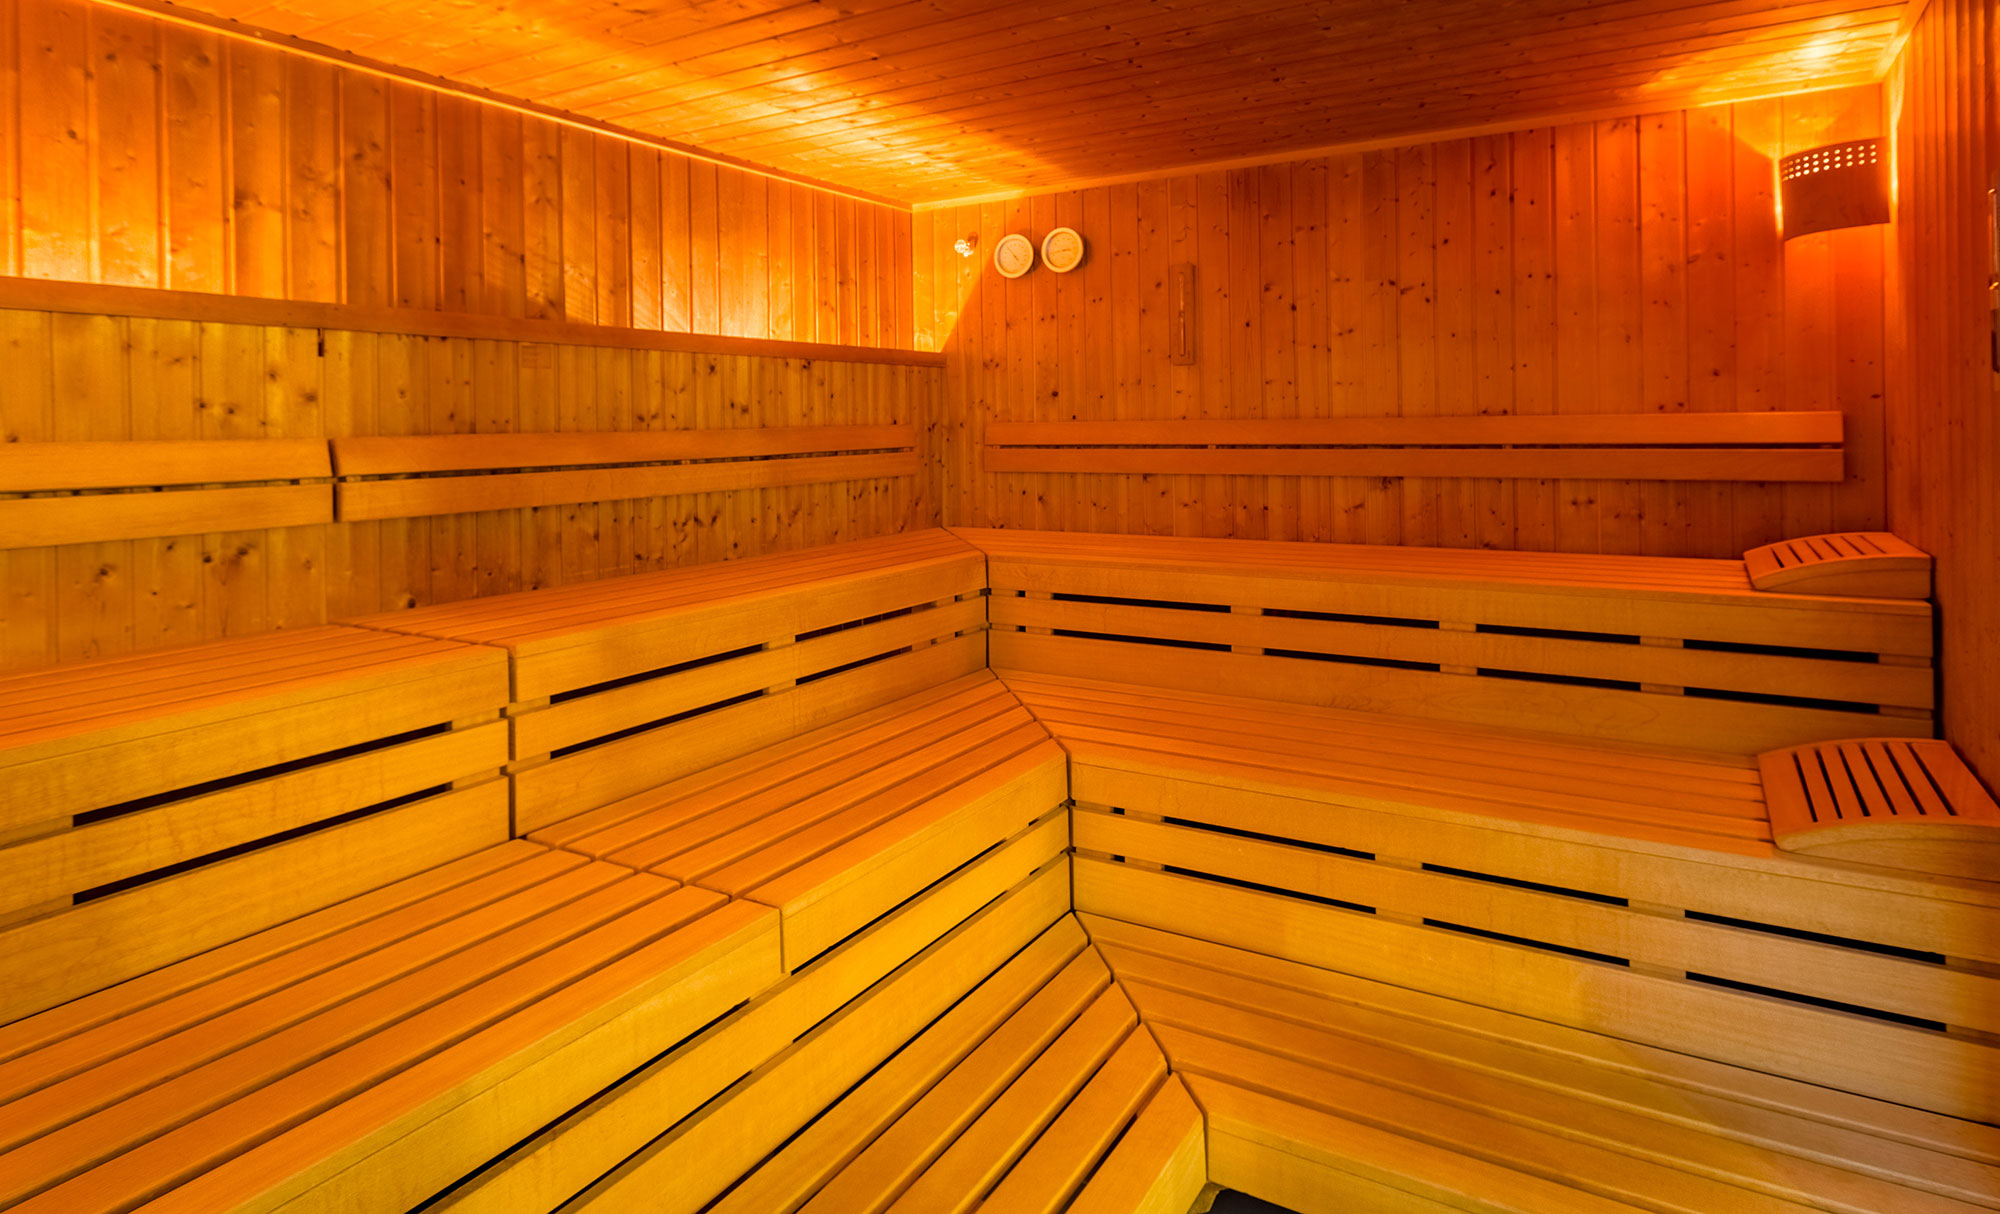 Herzlich willkommen im life Fitnessstudio - Sauna & Wellness in Ganderkesee!